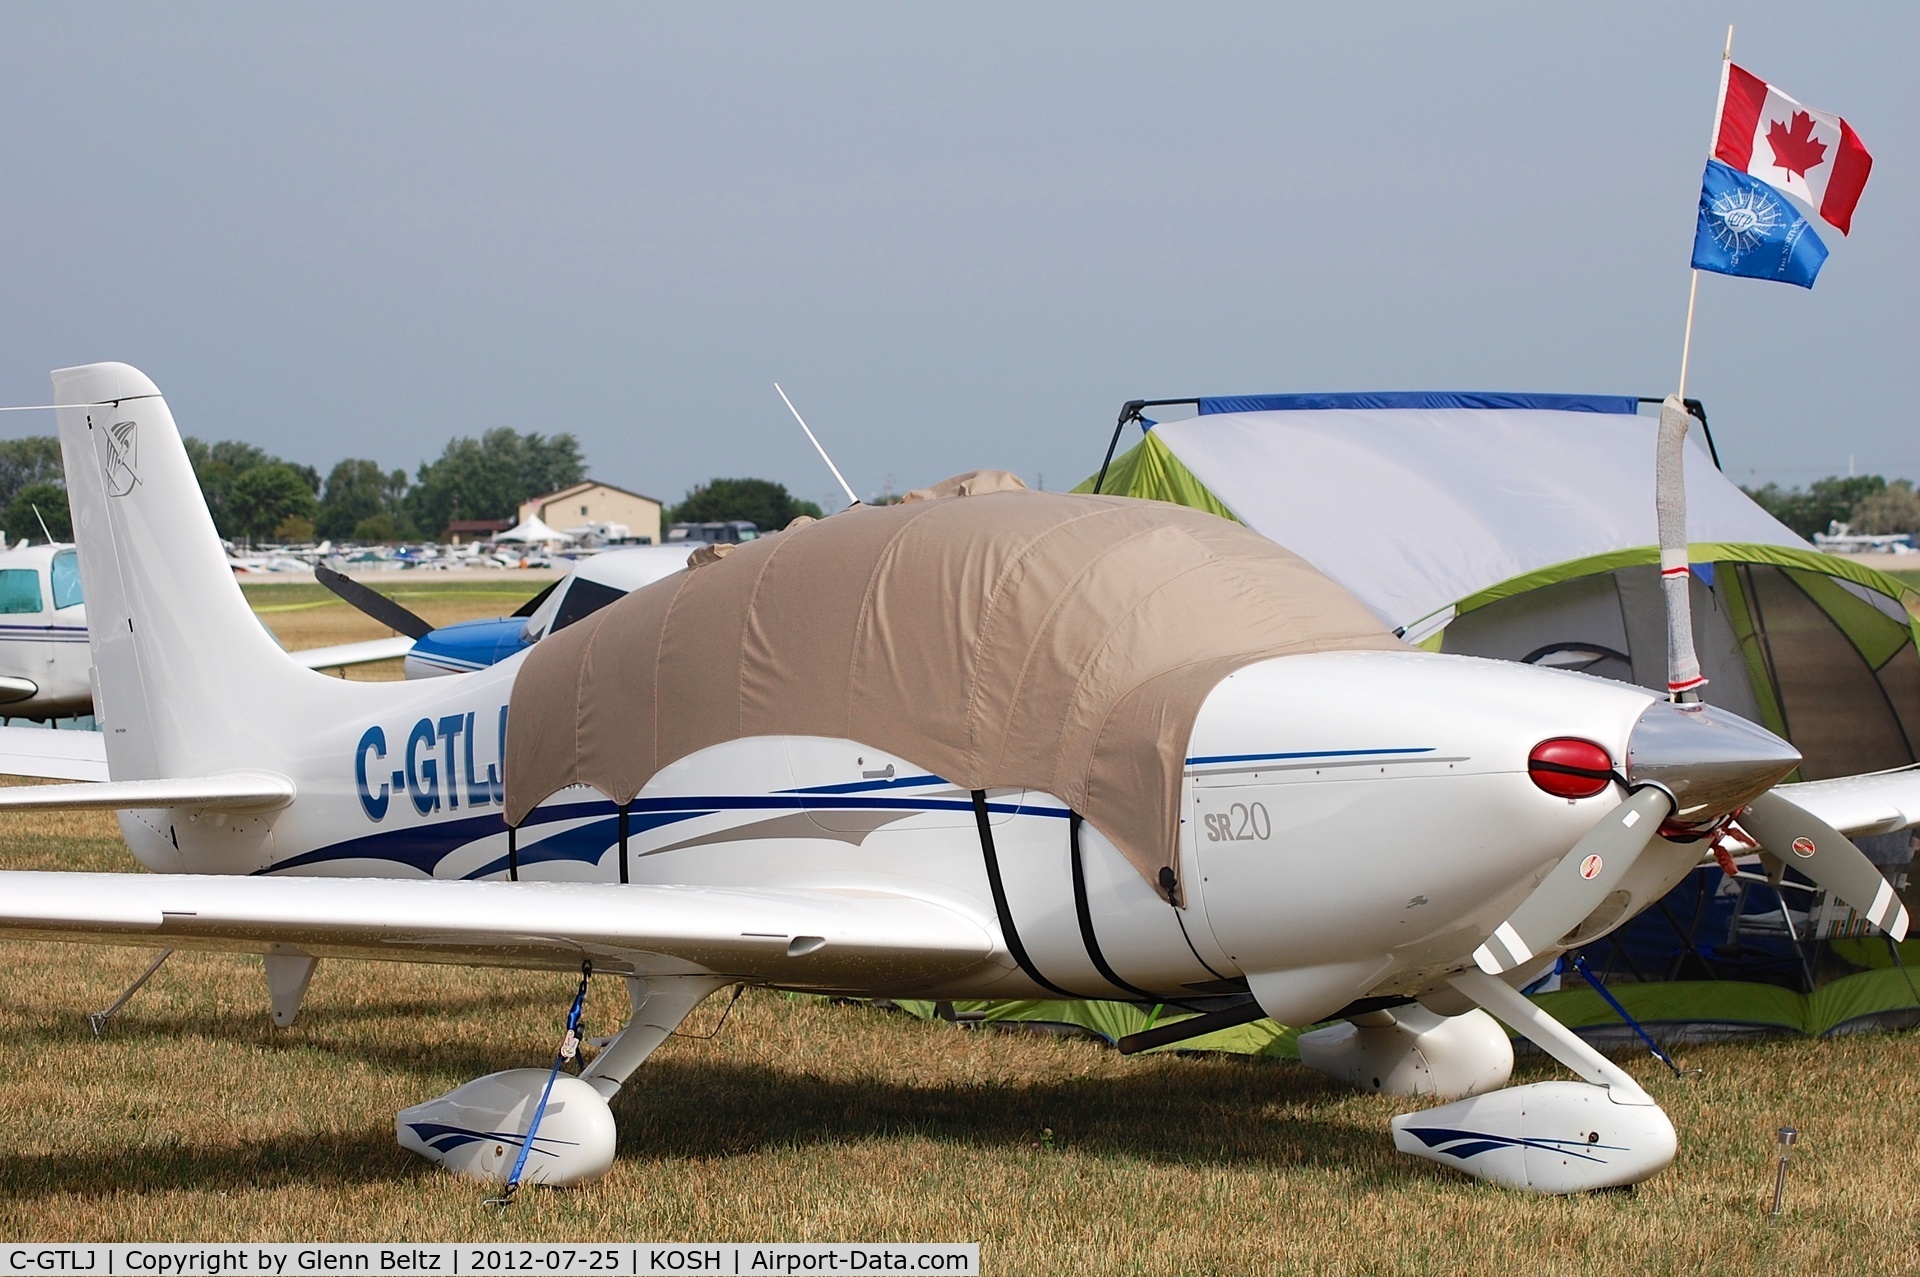 C-GTLJ, 2003 Cirrus SR20 C/N 1338, Parked at EAA Airventure/Oshkosh on 25 July 2012.